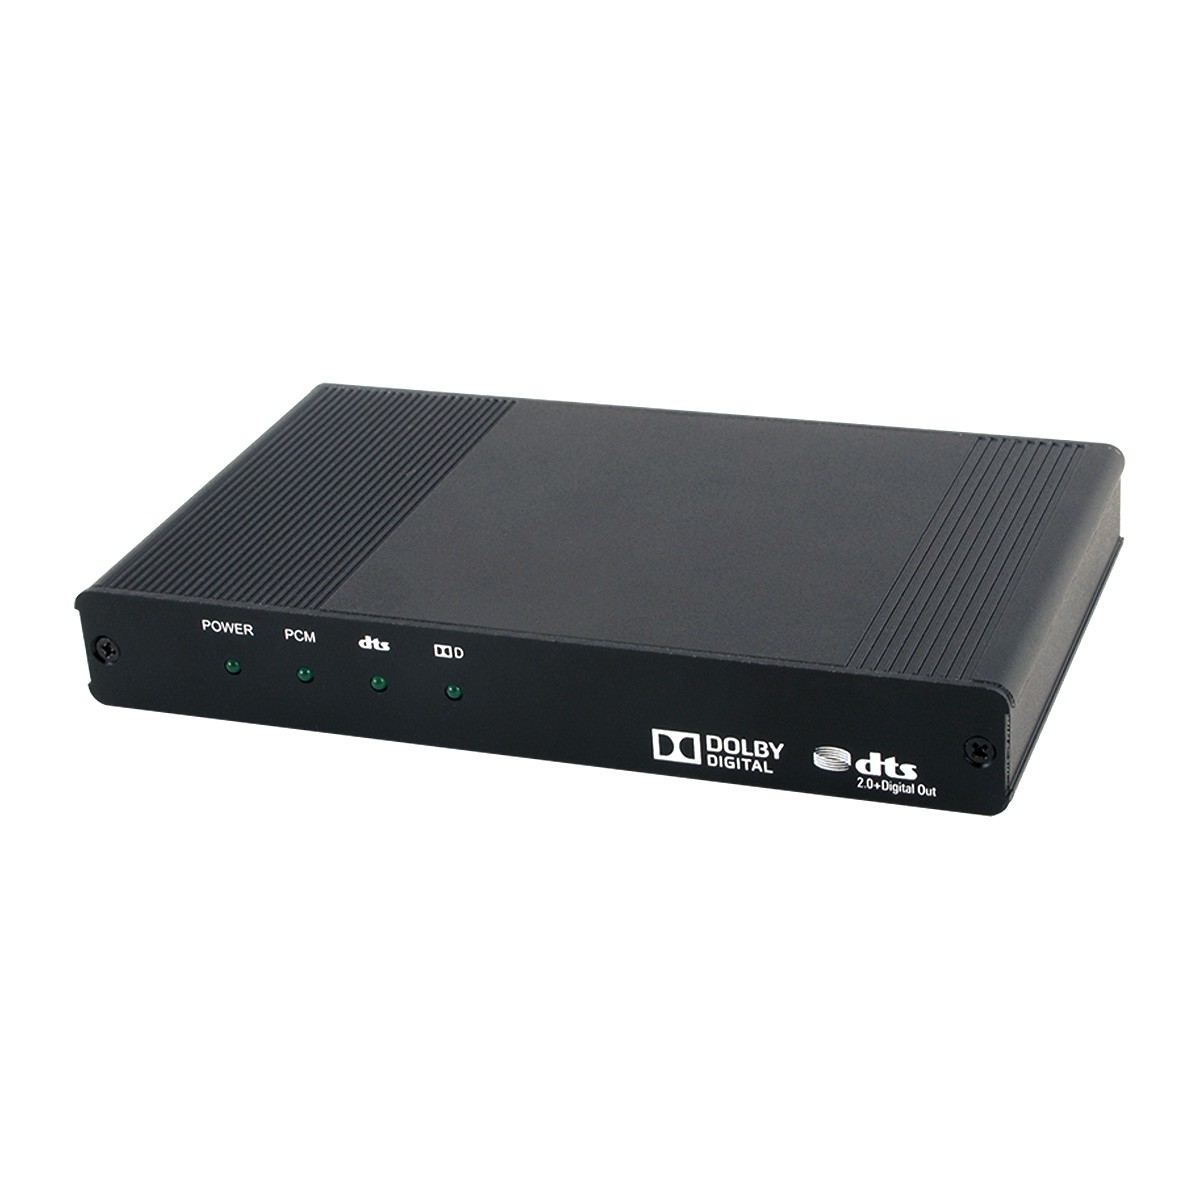 CYP CPRO-SE2DD Converter HDMI UHD DTS Dolby Digital to SPDIF RCA